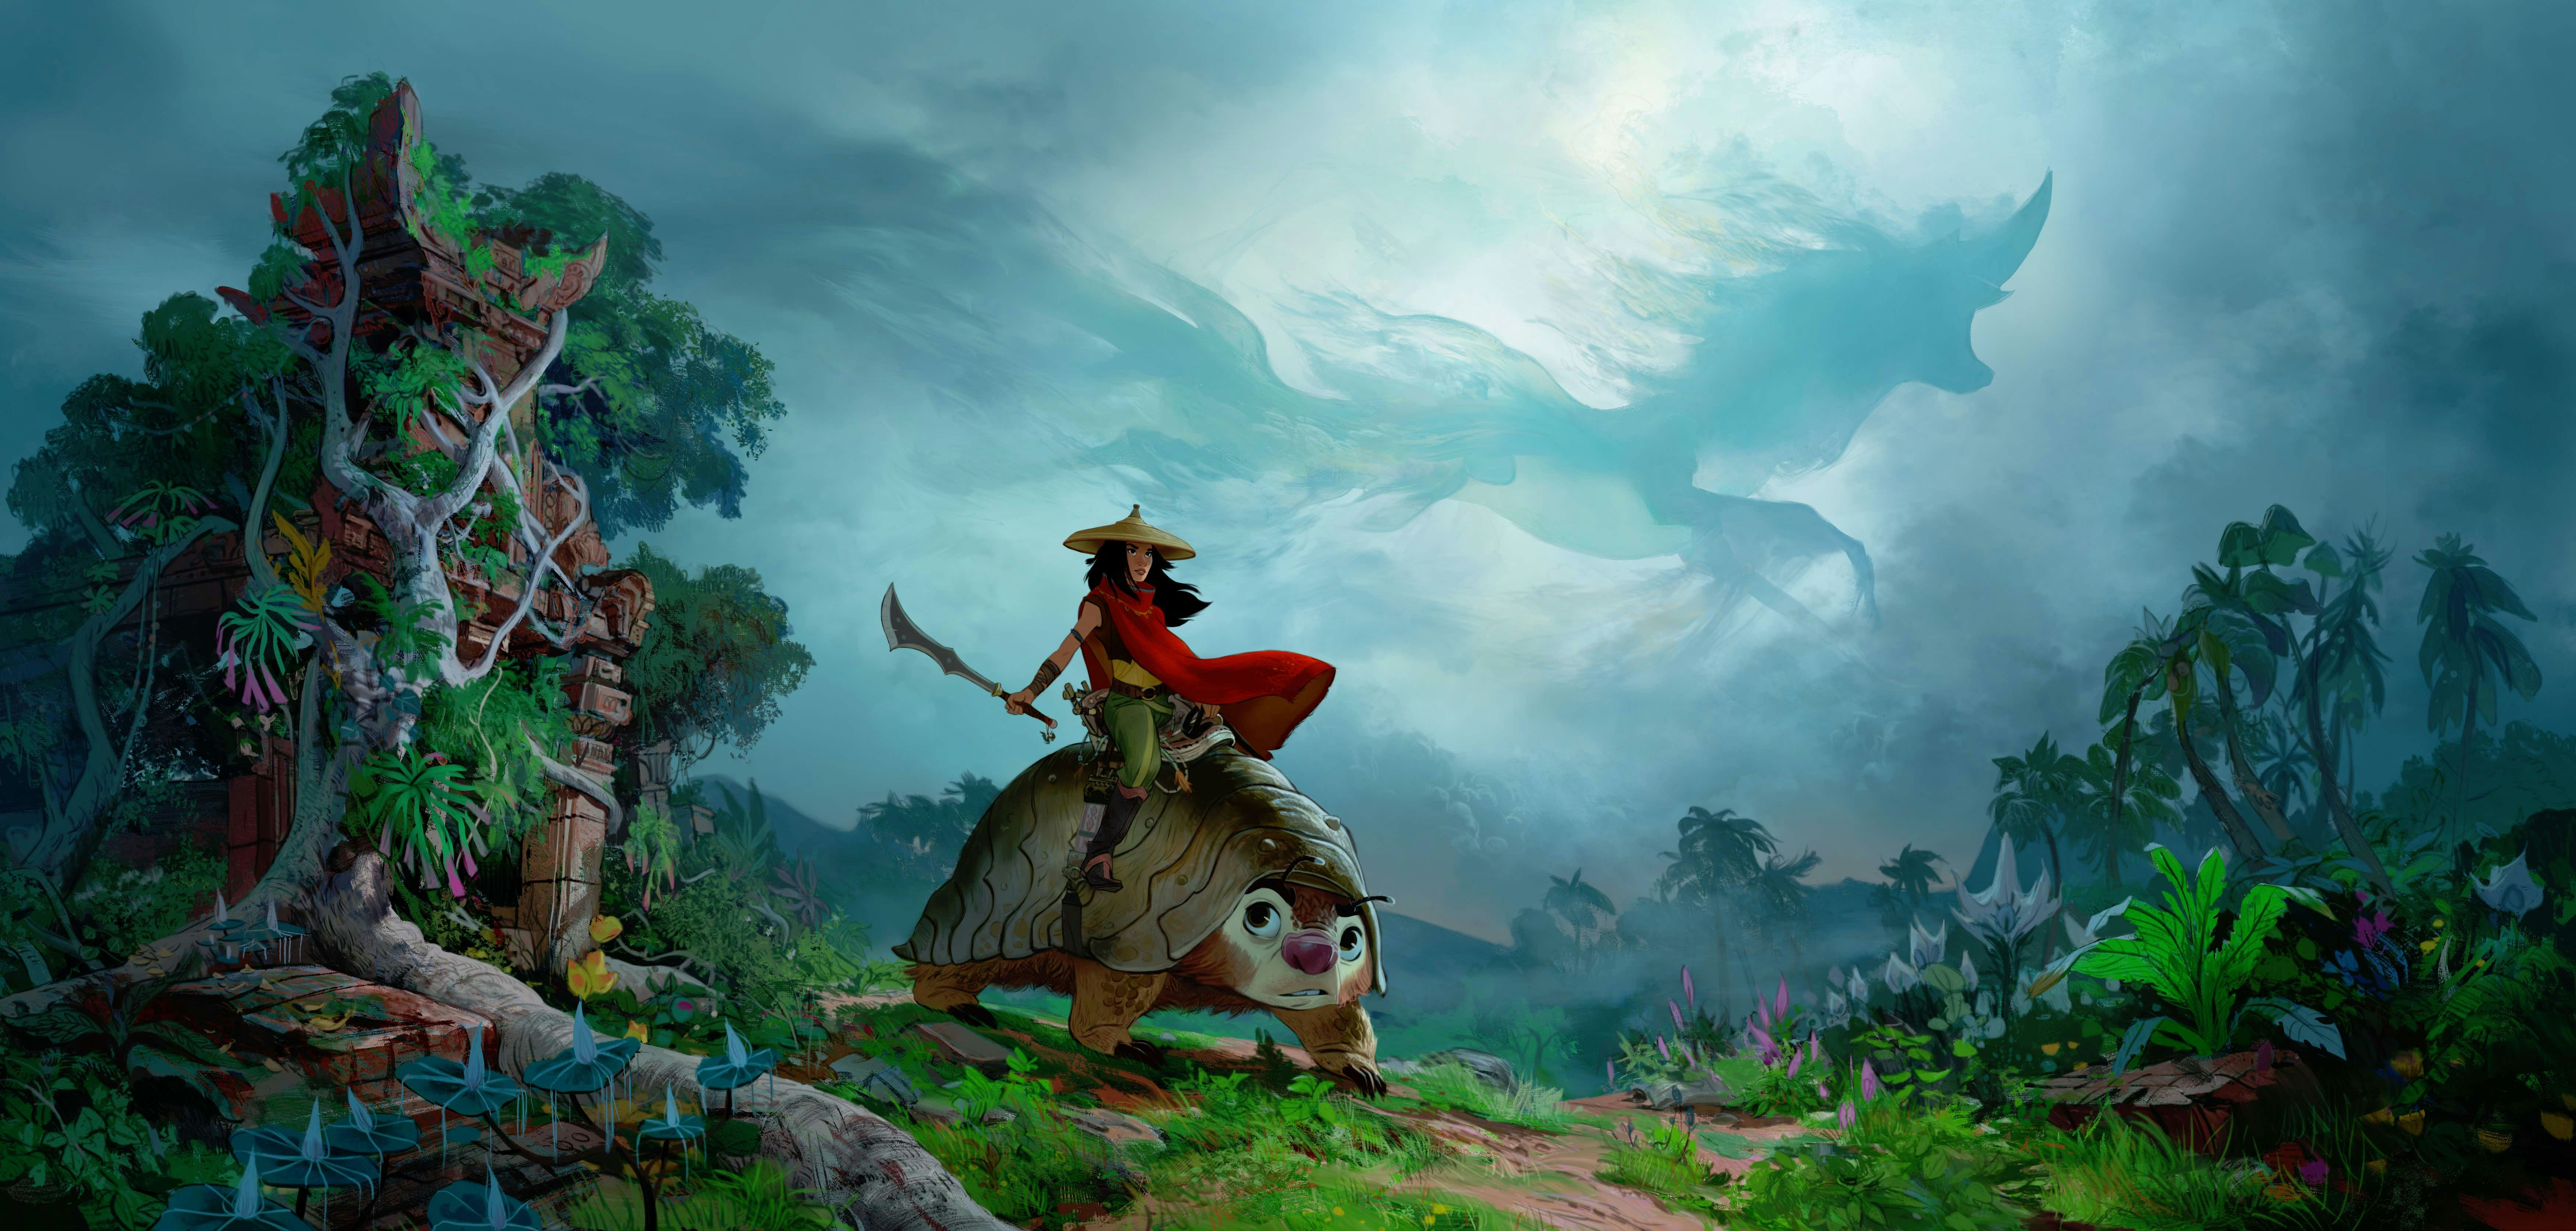 Disney Raya and the Last Dragon Land of Kumandra Set